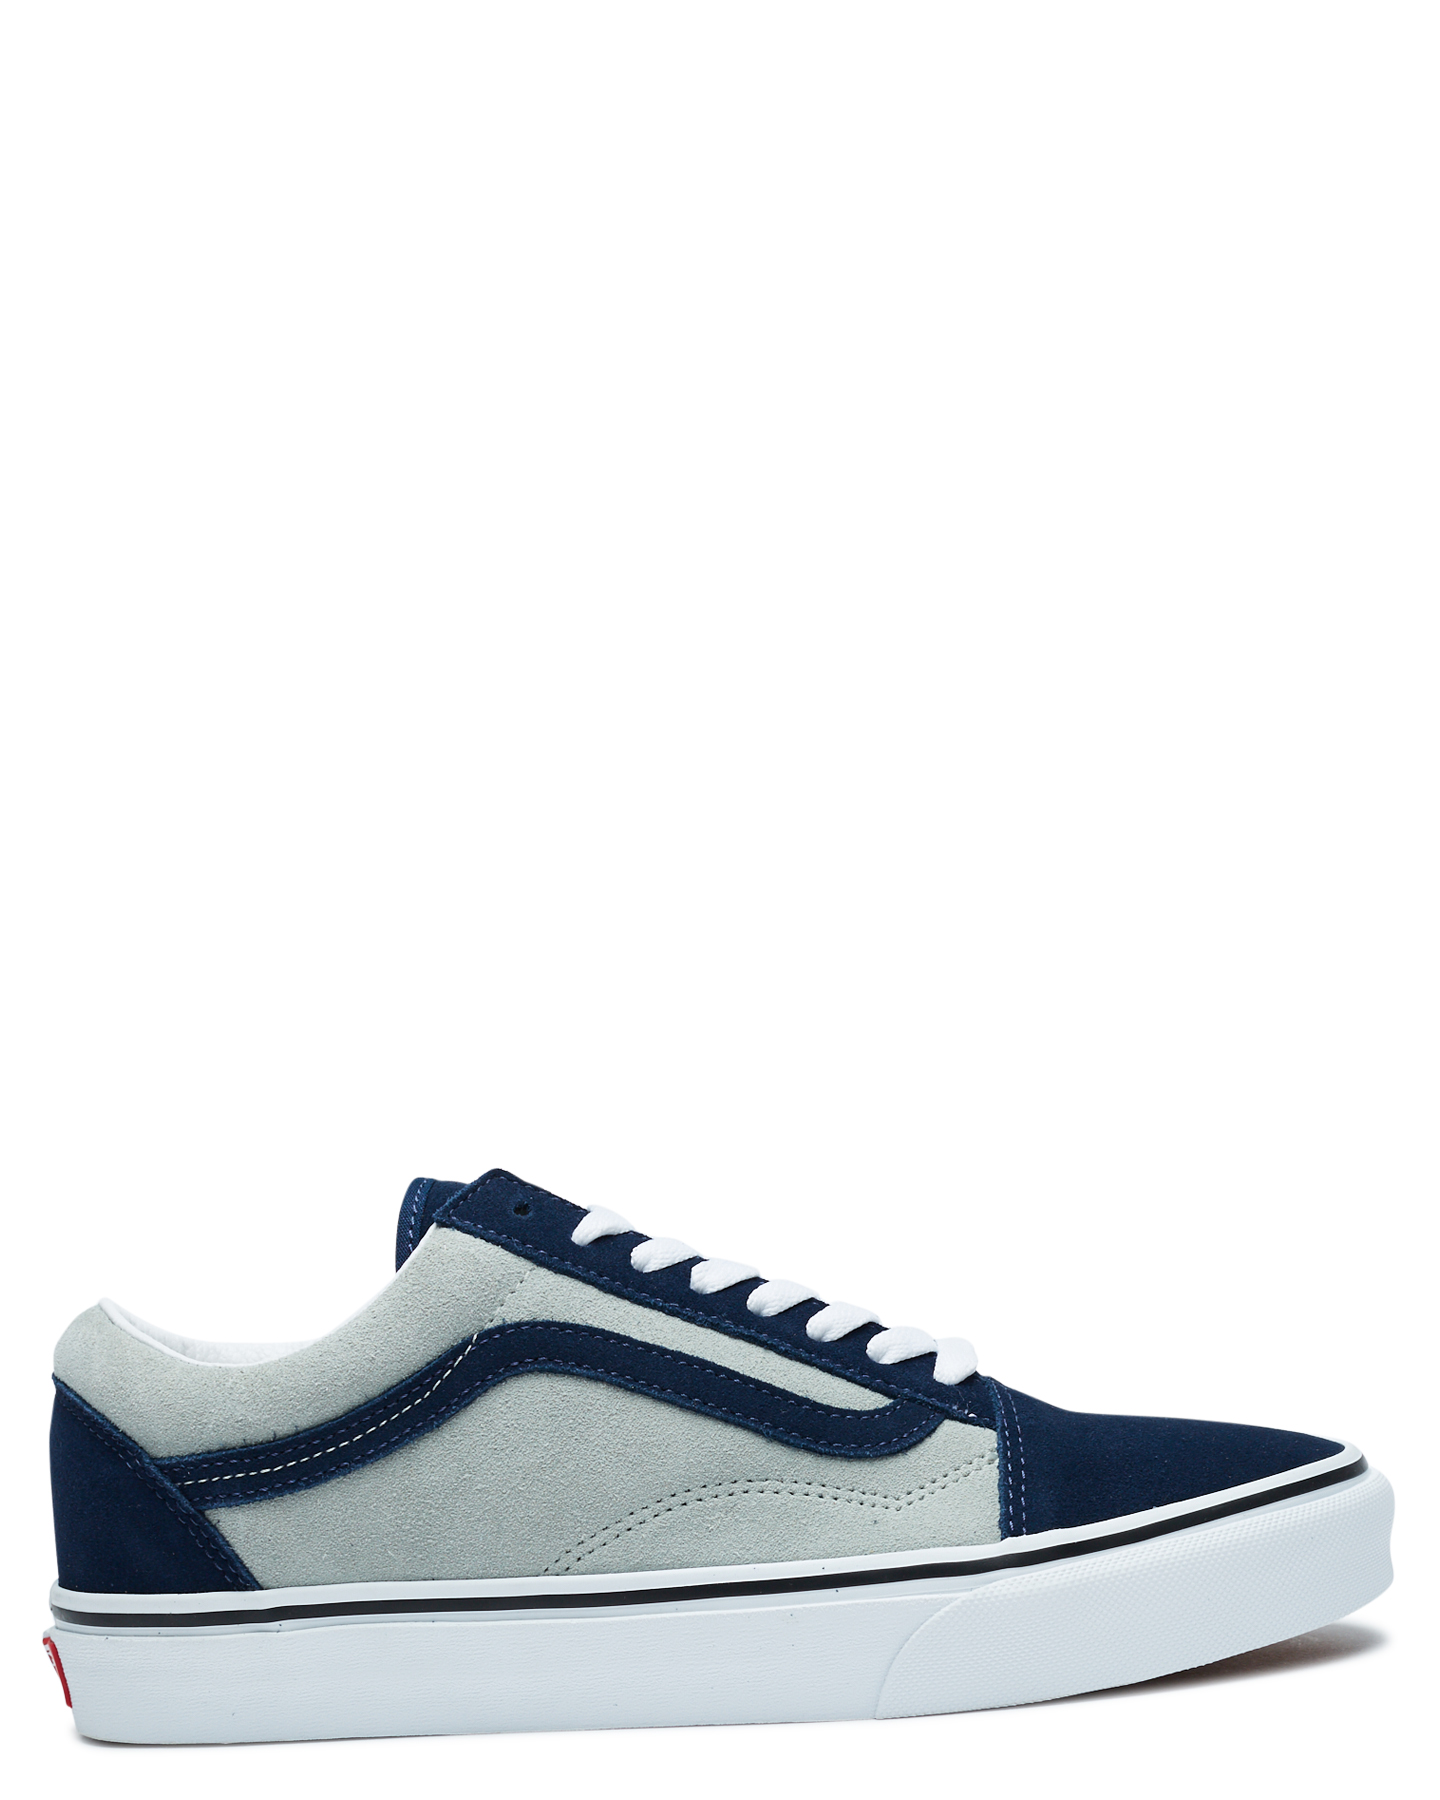 gray vans sneakers